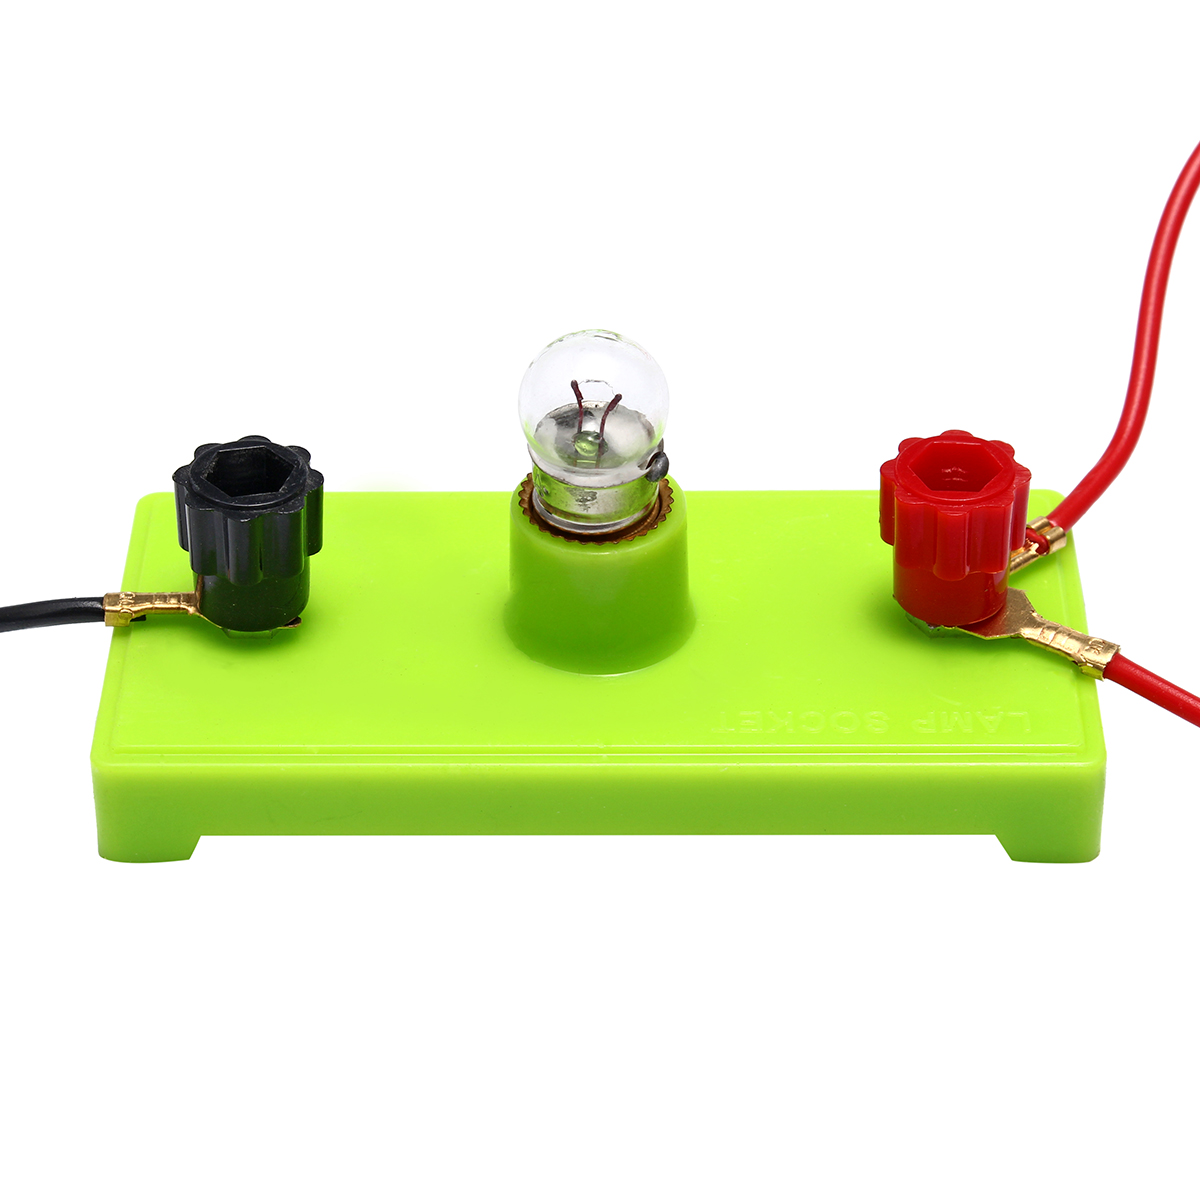 Electric-Circuit-Kit-Bulb-Switch-Conductive-Line-Kid-School-Educational-Science-Toy-DIY-Montessori-1313794-5